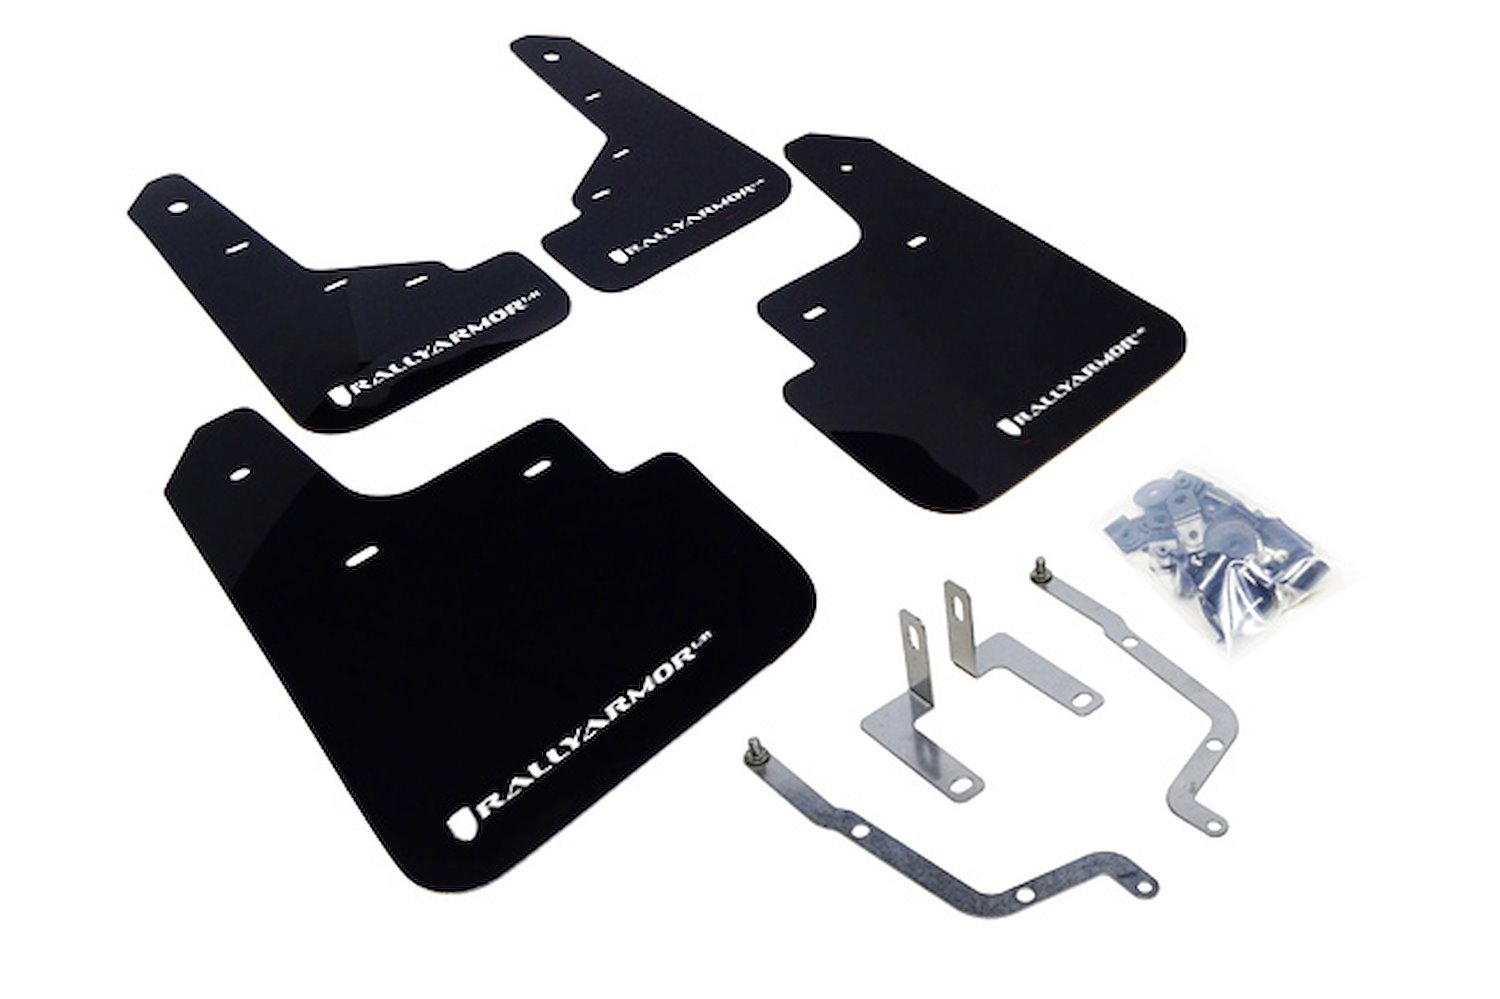 MF31URBLKWH Mud Flap Kit for 2014-2018 Mazda 3 Grand Touring, Sport, SV, Touring - White Logo